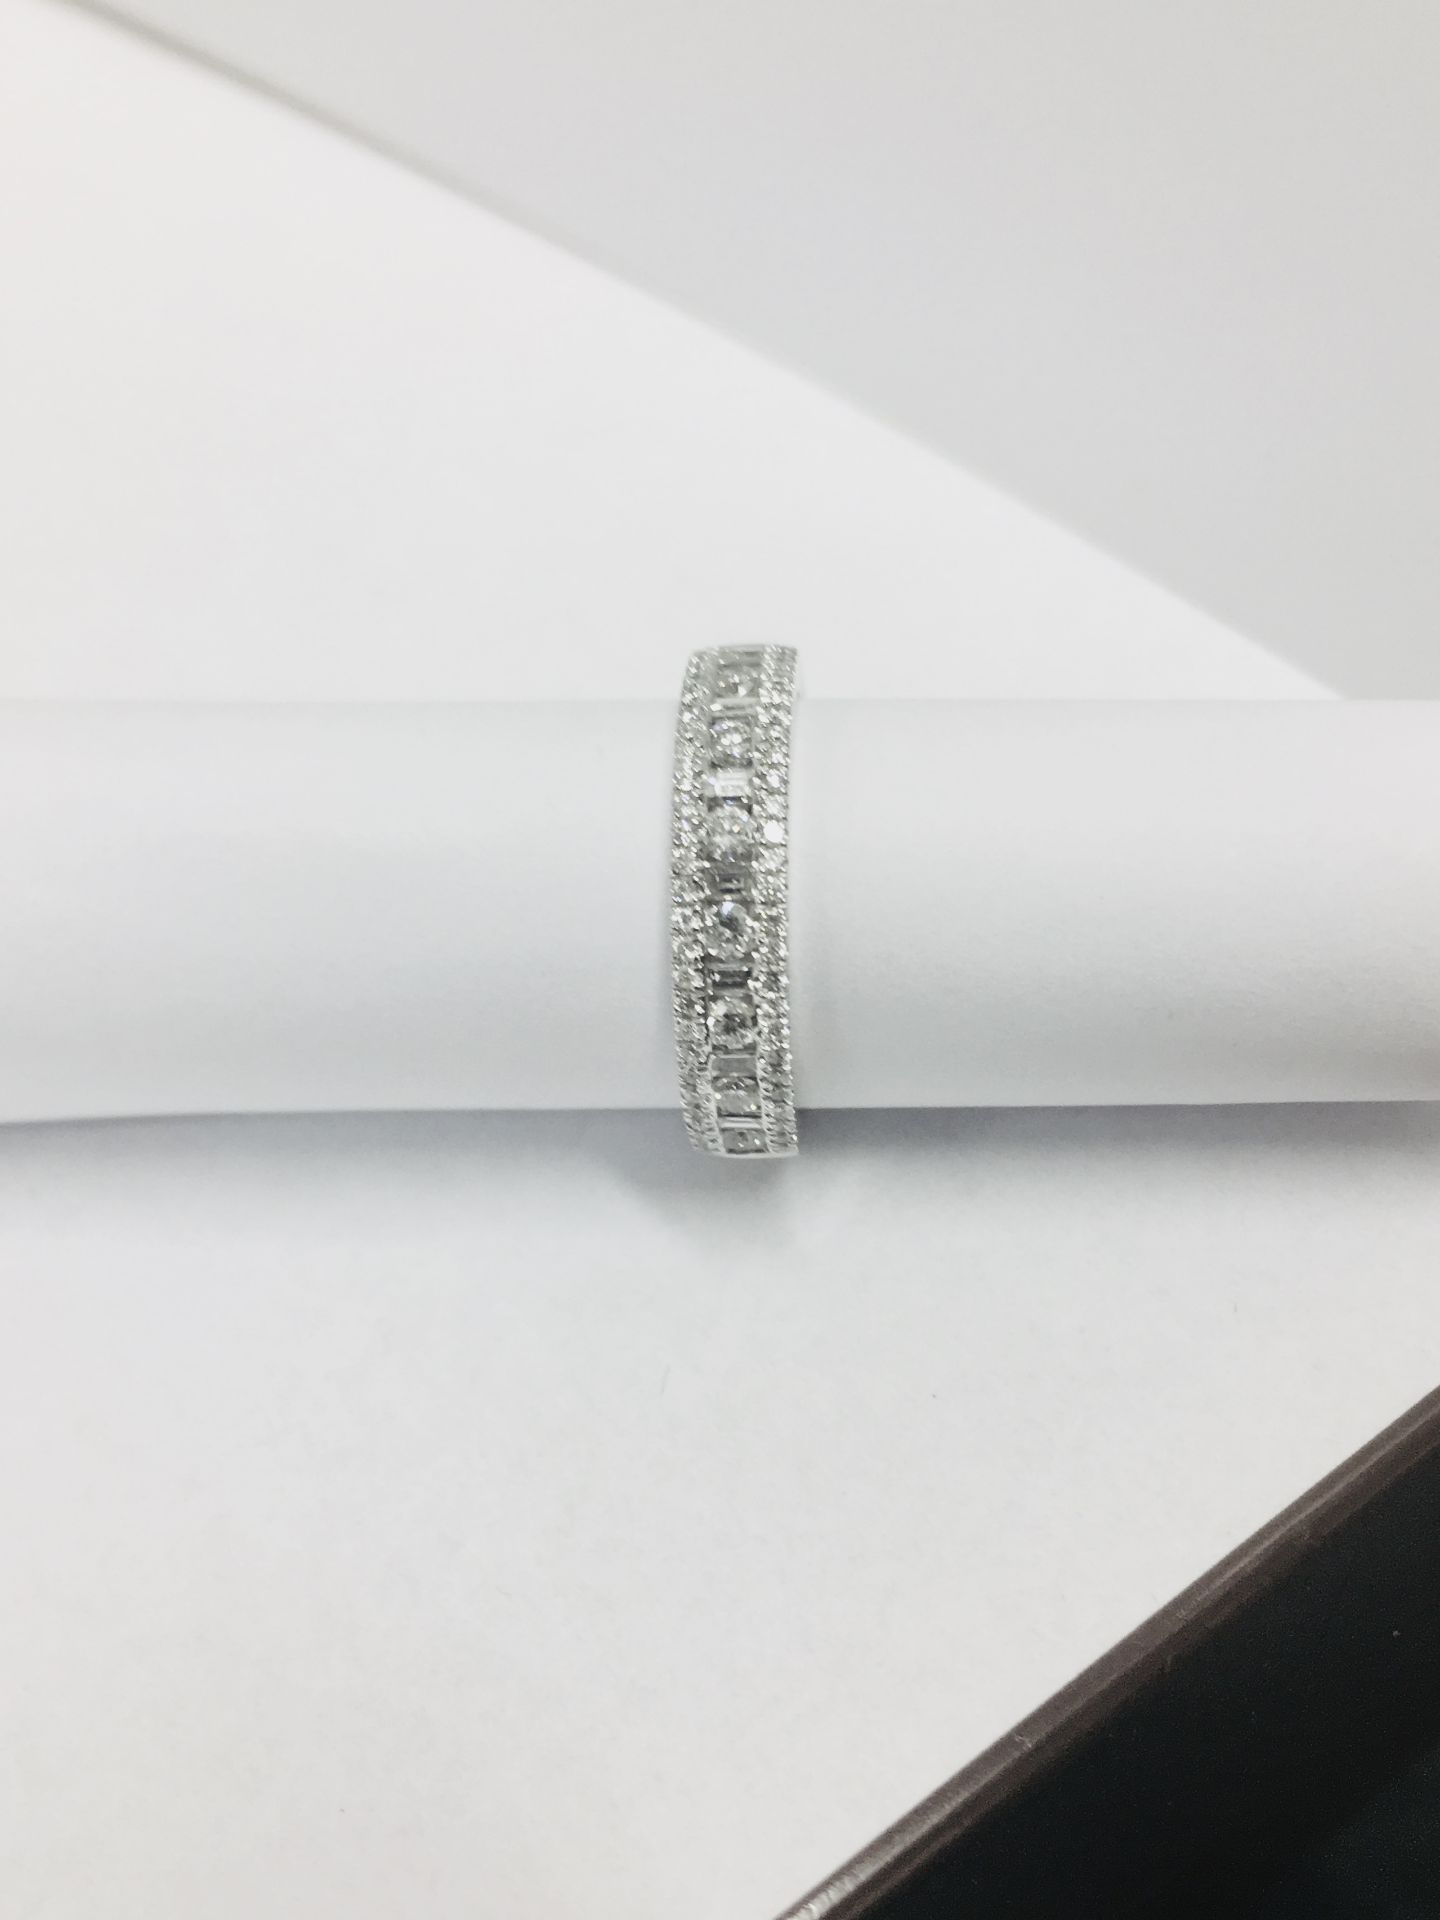 18ct white gold diamond dress ring,0.59ct diamond brilliant cut and baguette damonds h colour vs - Image 2 of 4